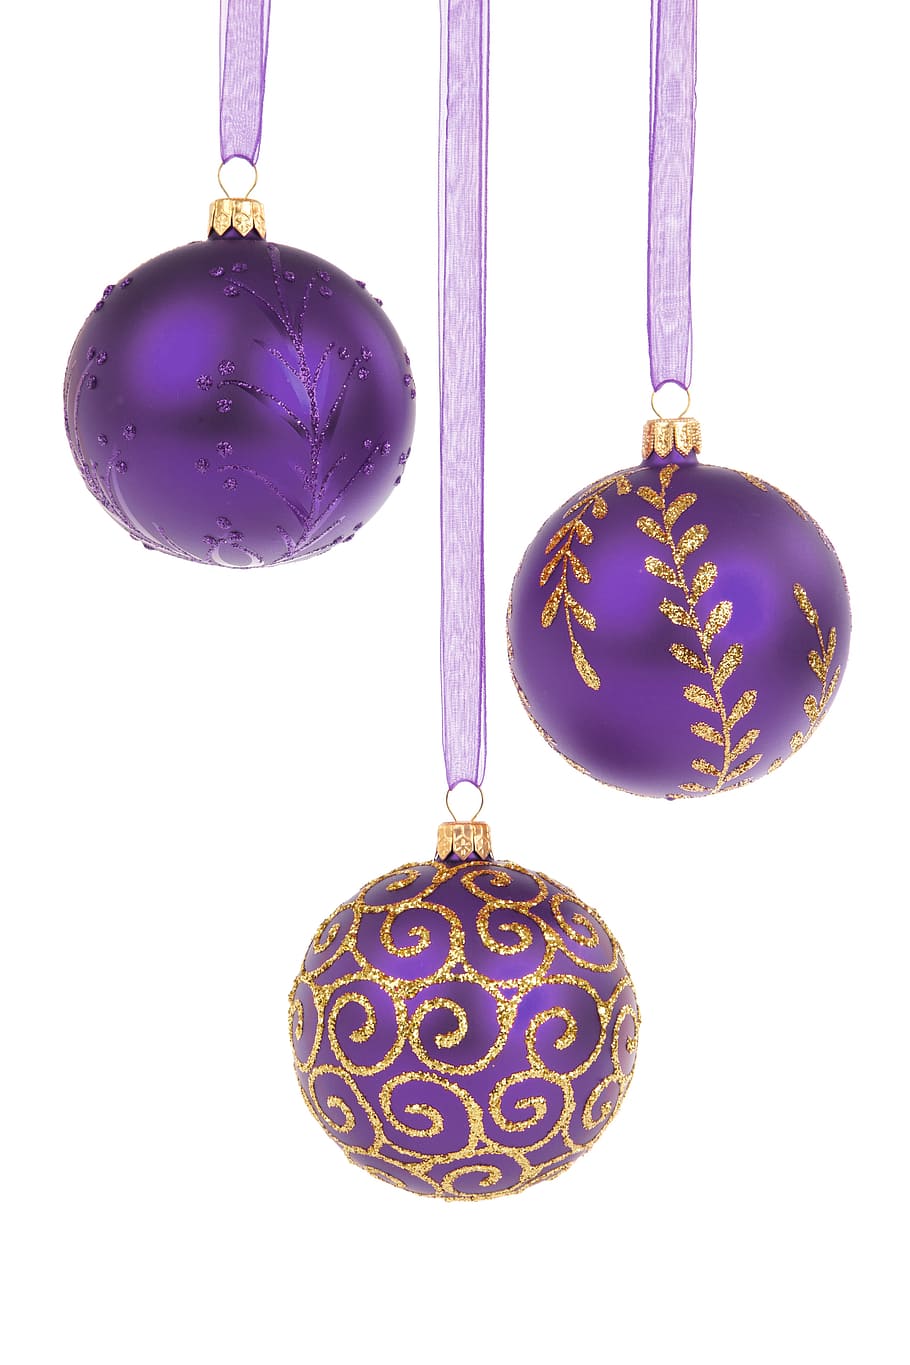 three purple baubles, ball, balls, bauble, celebration, christmas, december, decor, decoration, decorative